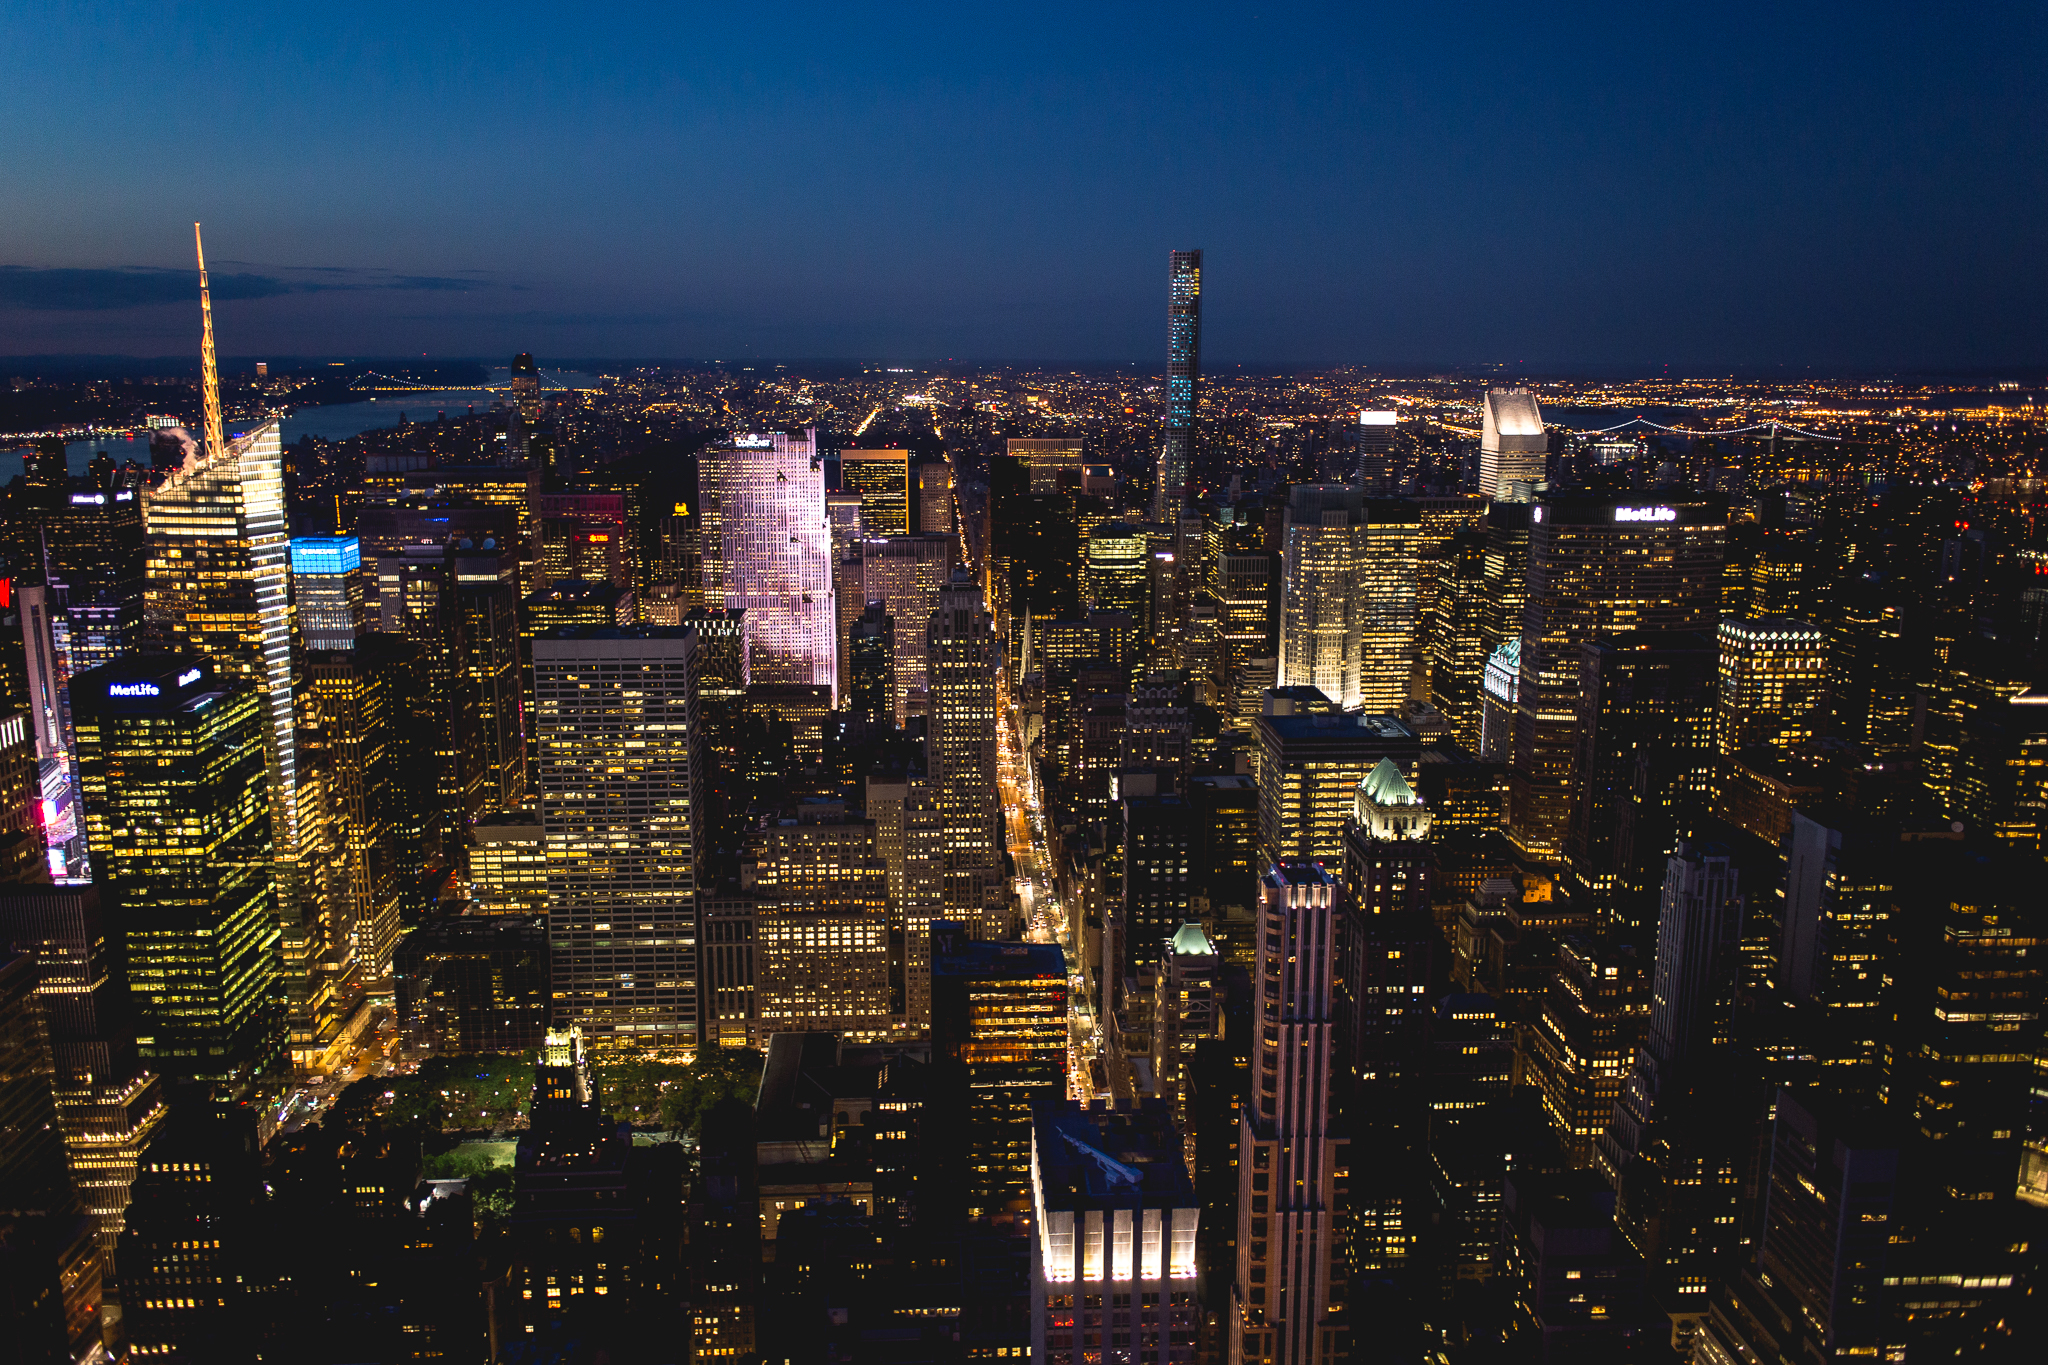 Night view of Midtown Manhattan by night.